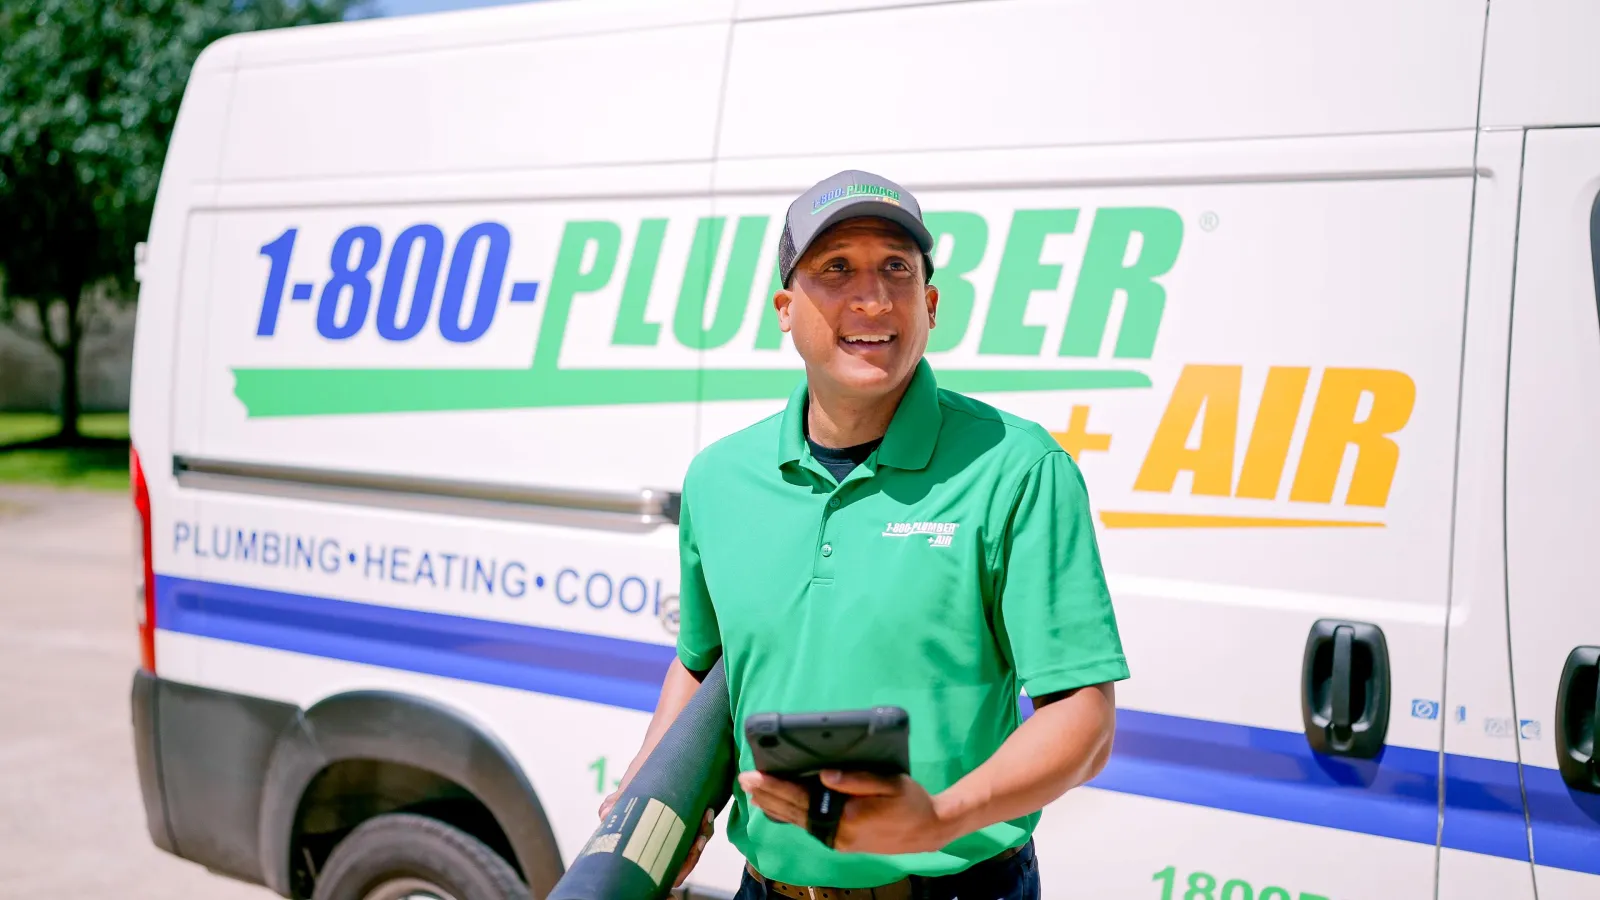 A Raleigh ac technician with a 1-800-Plumber +Air van